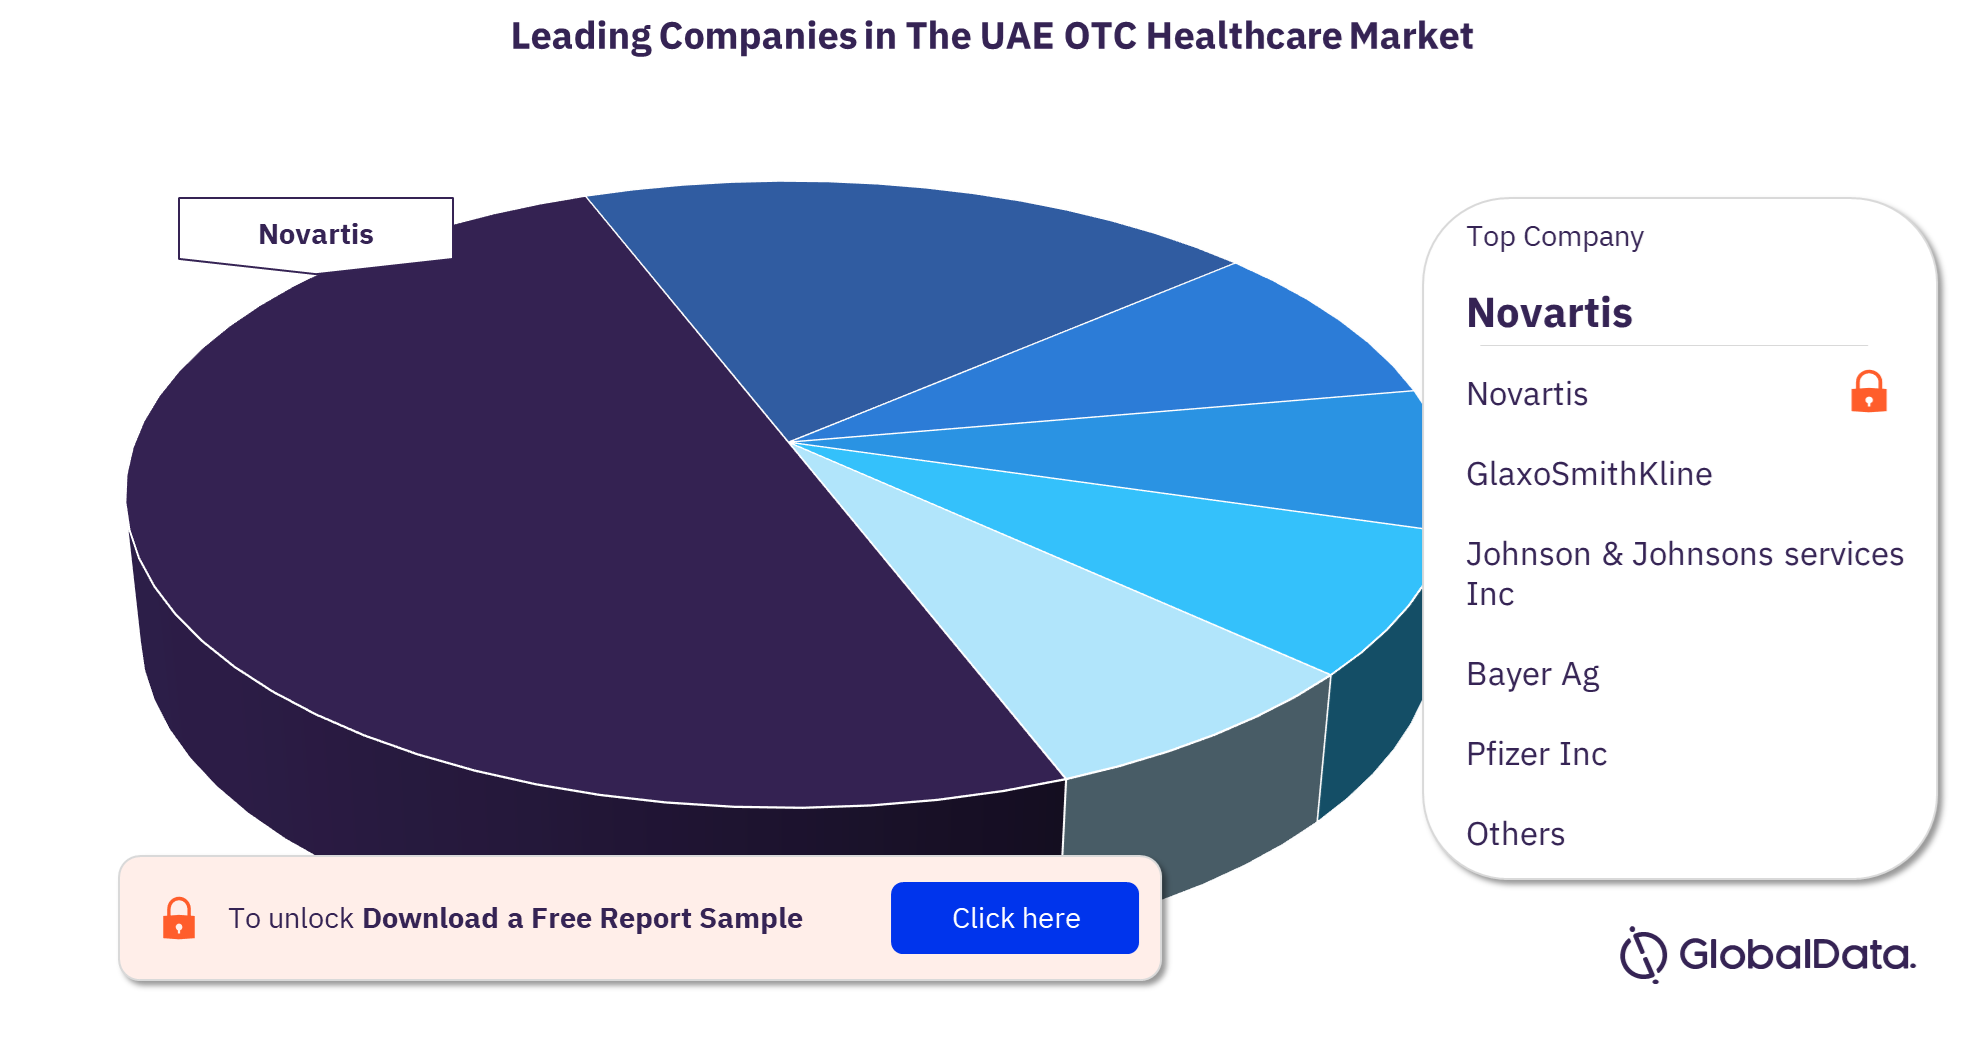 UAE OTC healthcare market, by leading companies